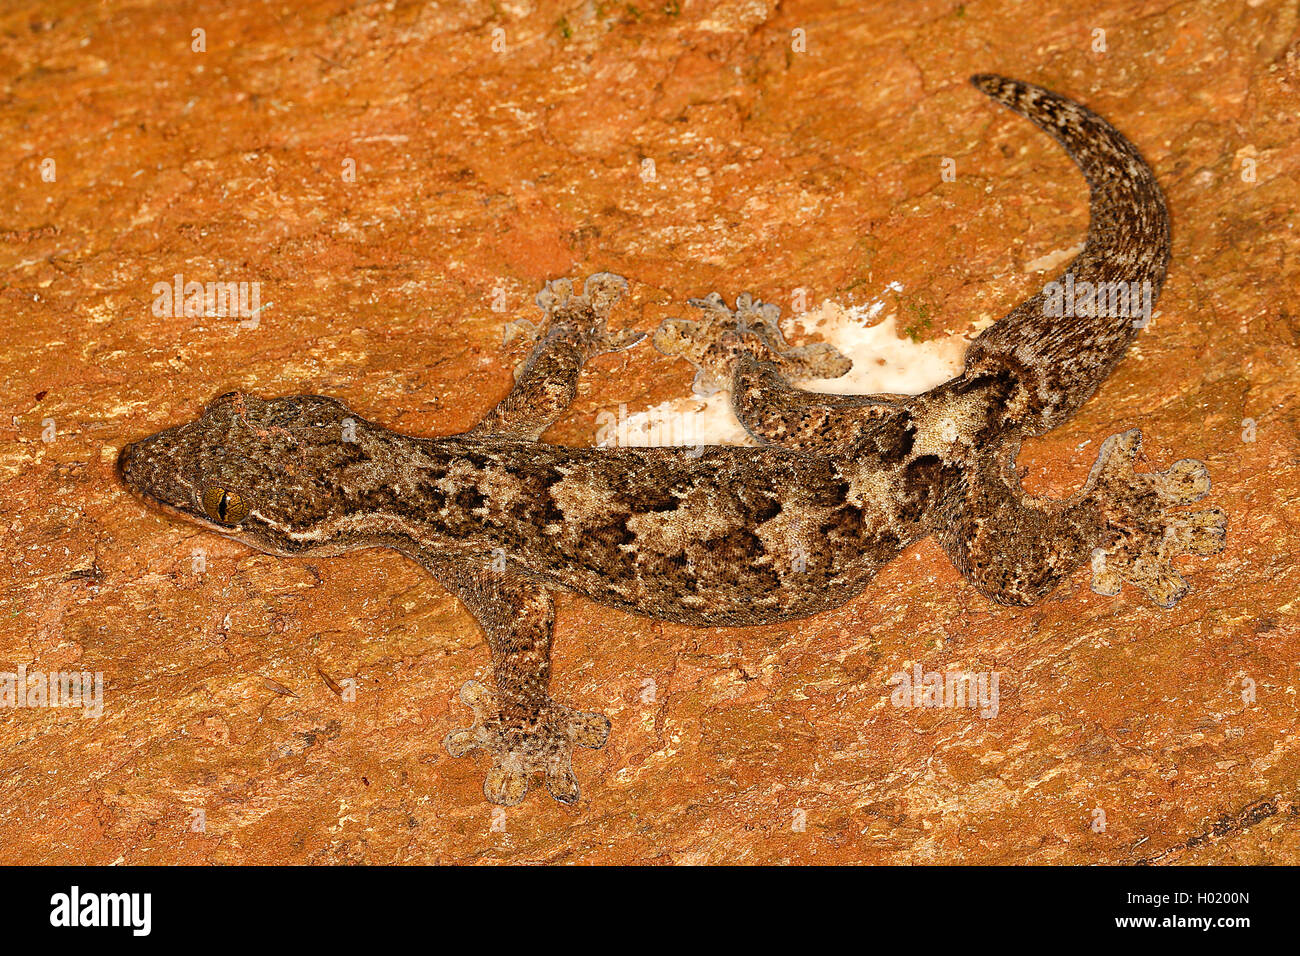 Wood slave, Turniptail gecko, Turnip-Tail Gecko (Thecadactylus rapicauda), on a stone, Costa Rica Stock Photo